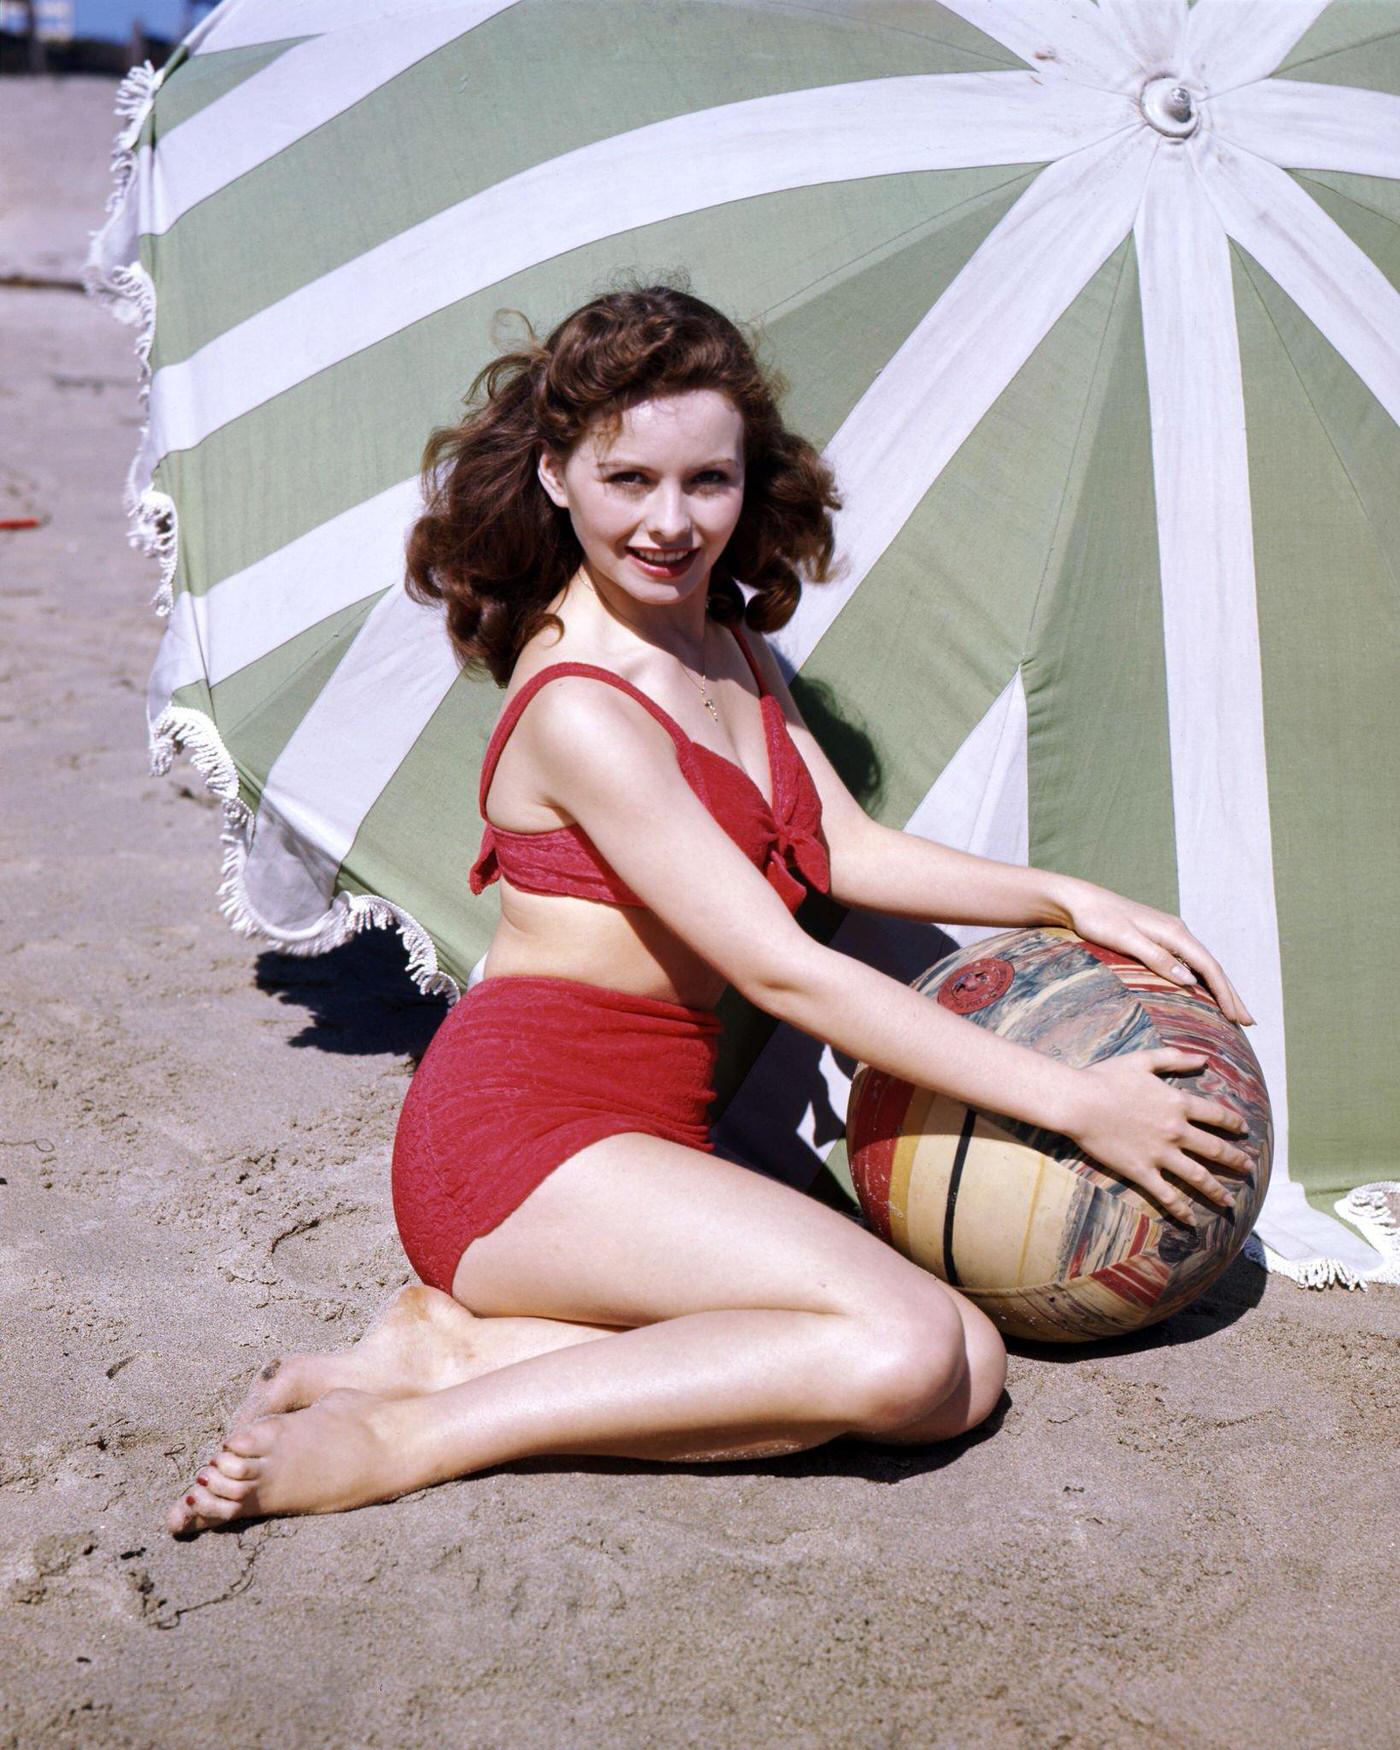 Jeanne Crain at the beach wearing a bikini, 1945.